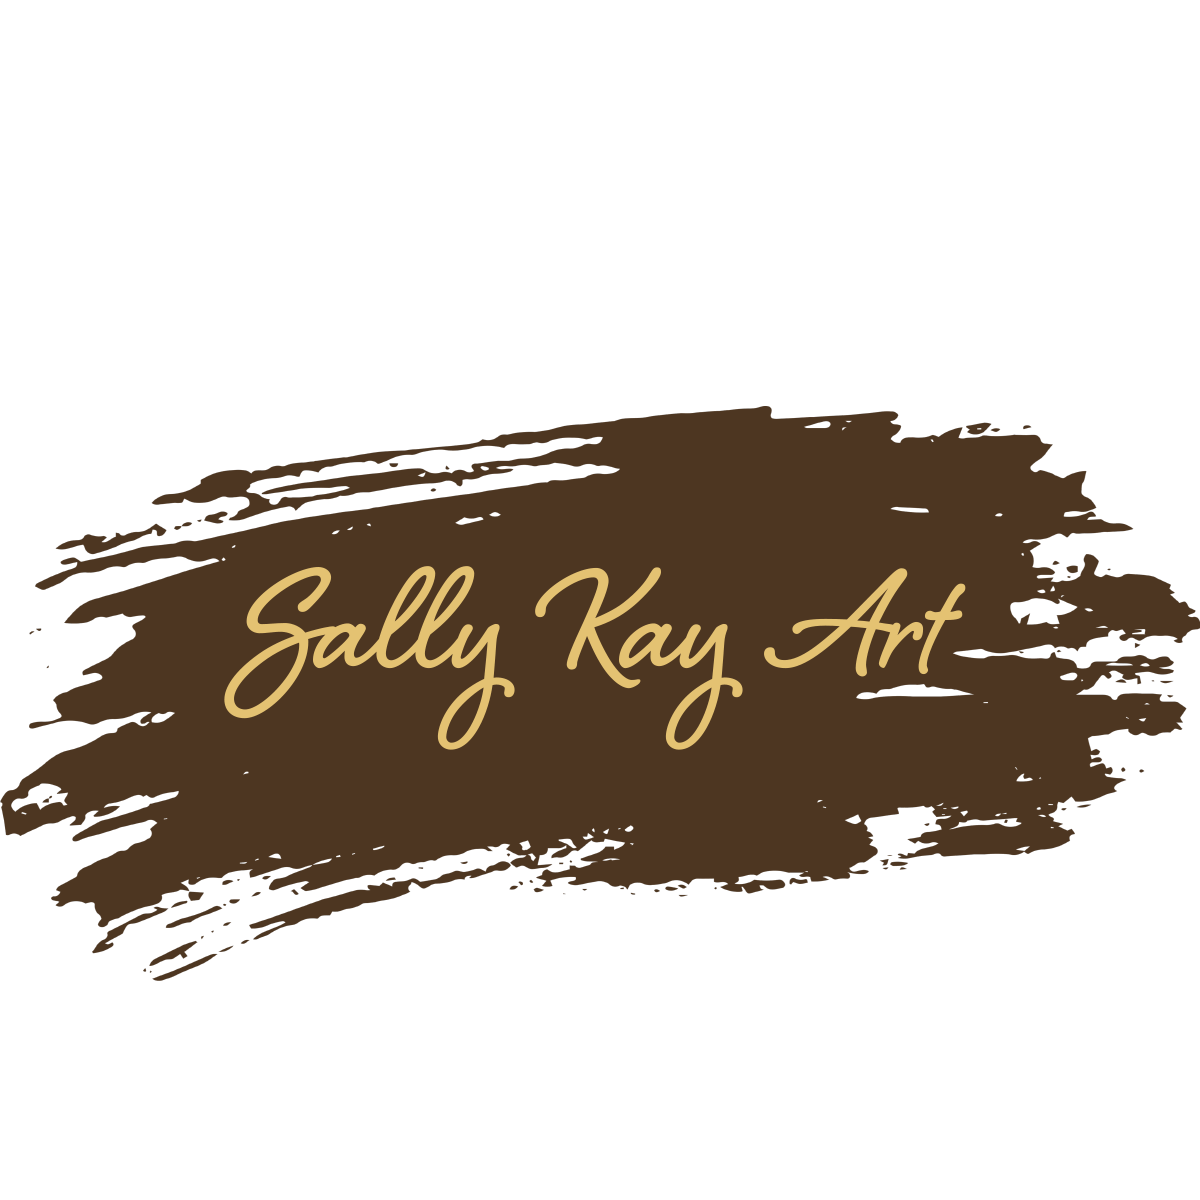 Sally Kay Art logo